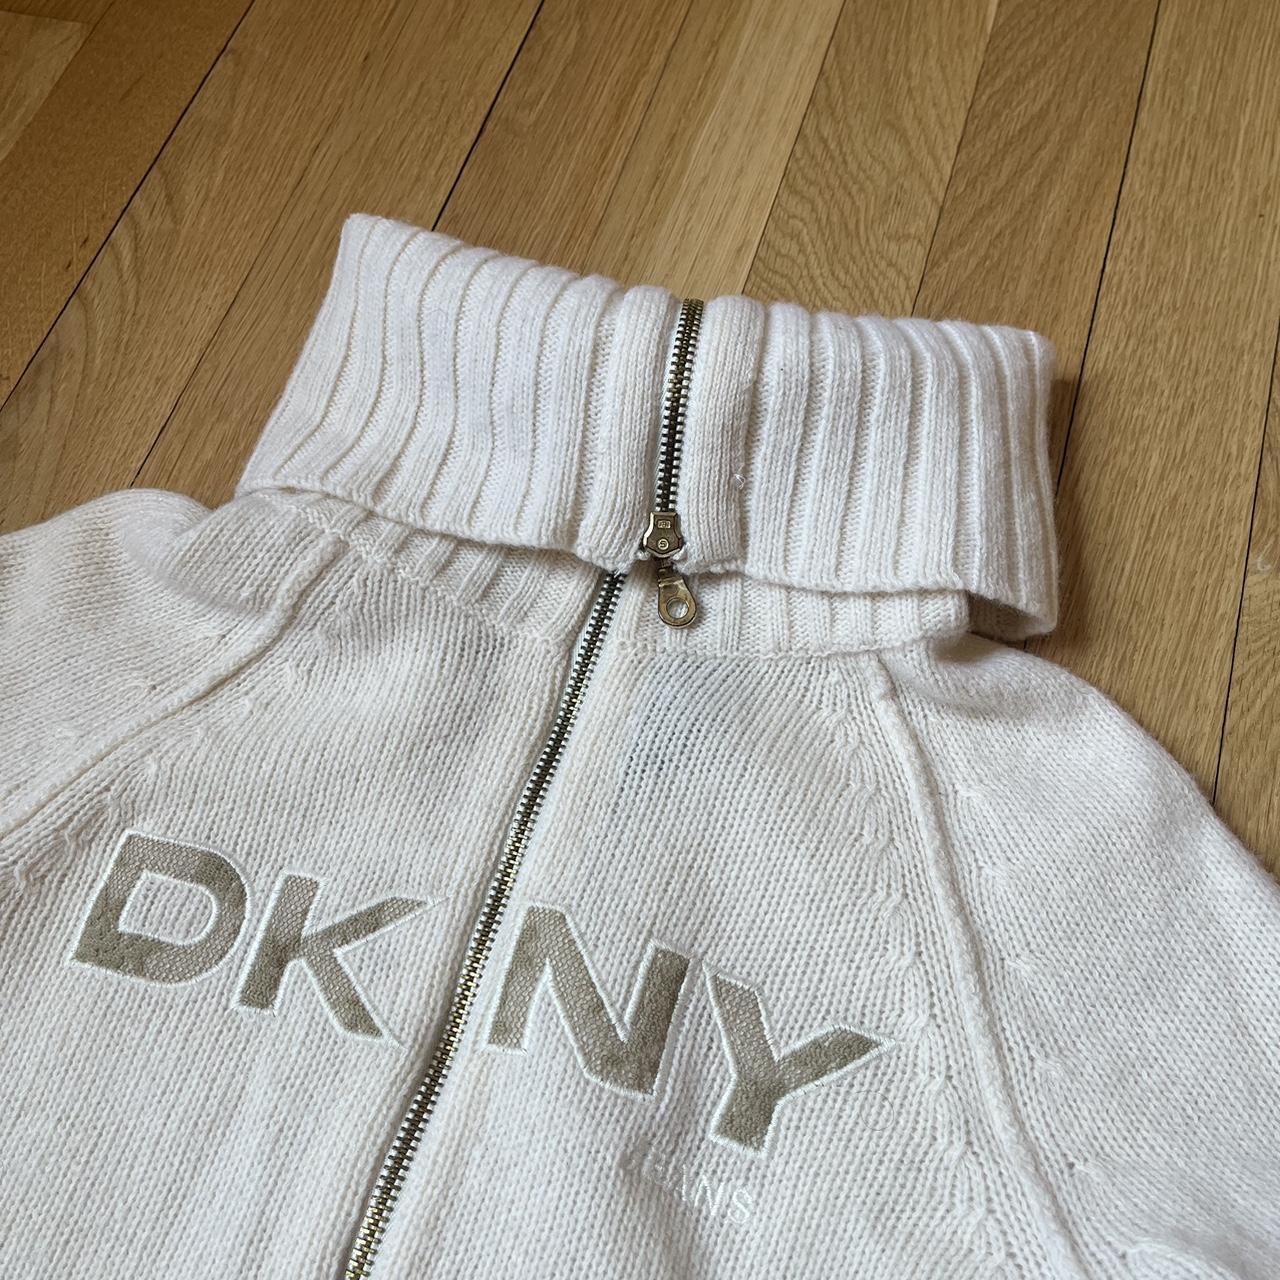 DKNY Women's Cream and White Jumper